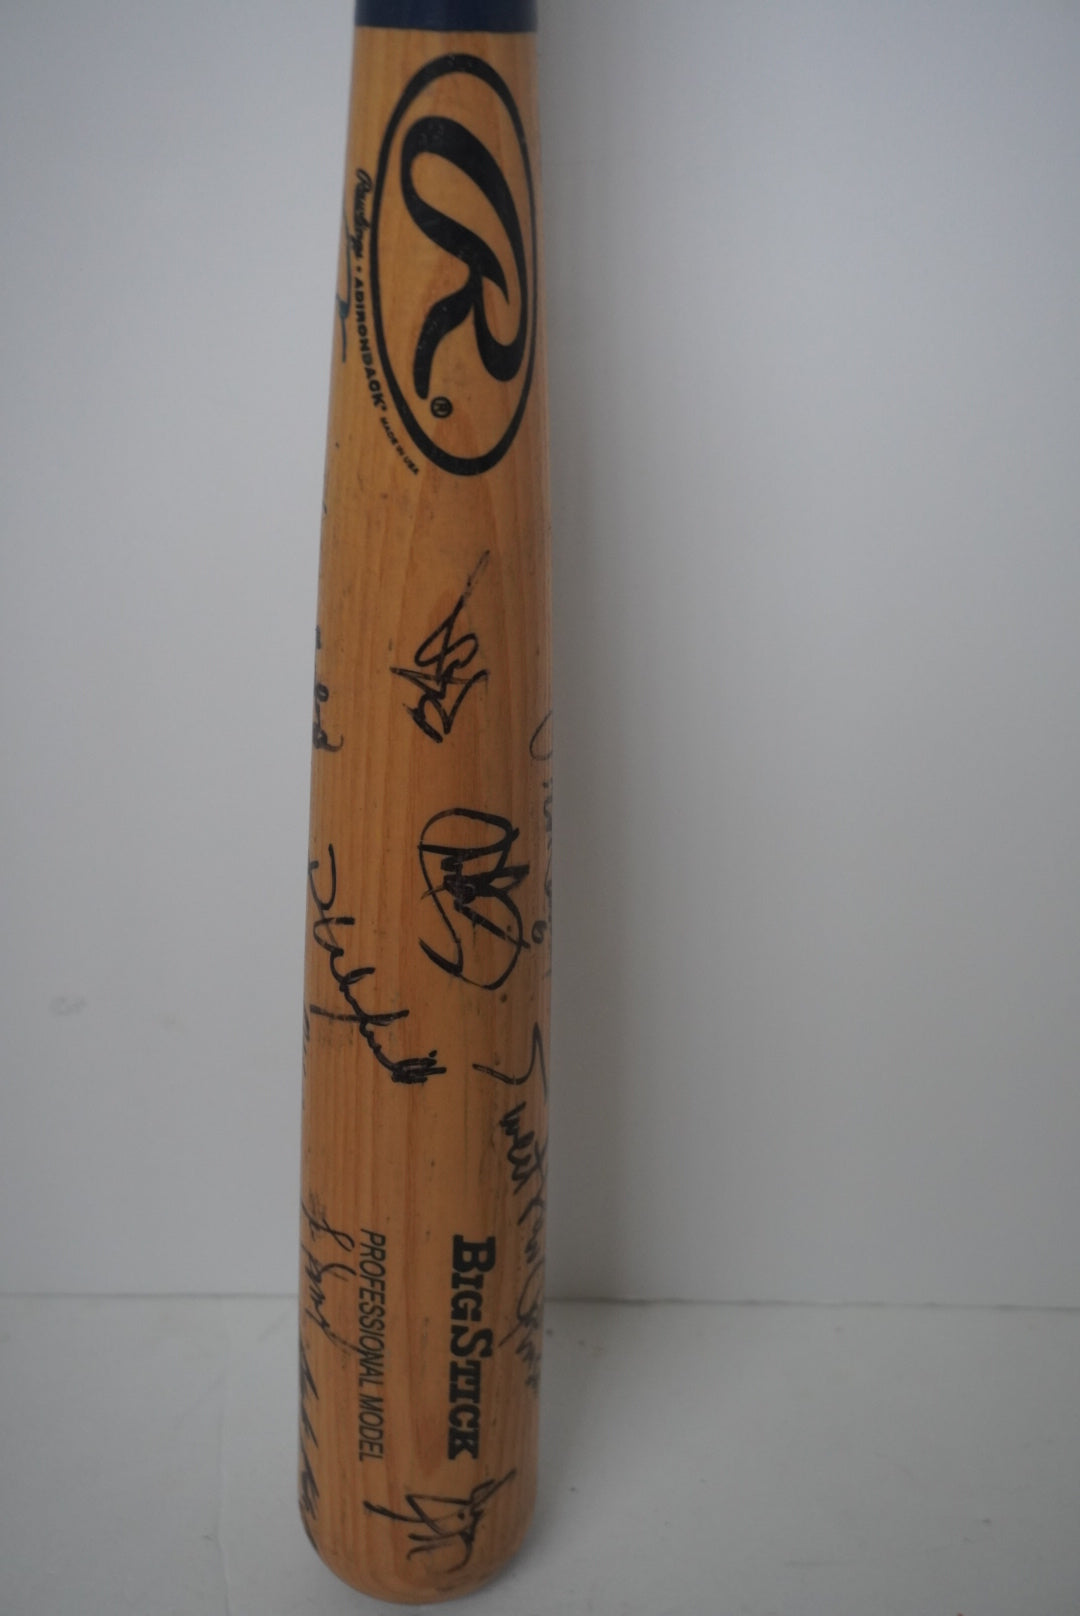 Los Angeles Dodgers Manny Ramirez, Matt Kemp, Andre Ethier big stick bat signed with proof